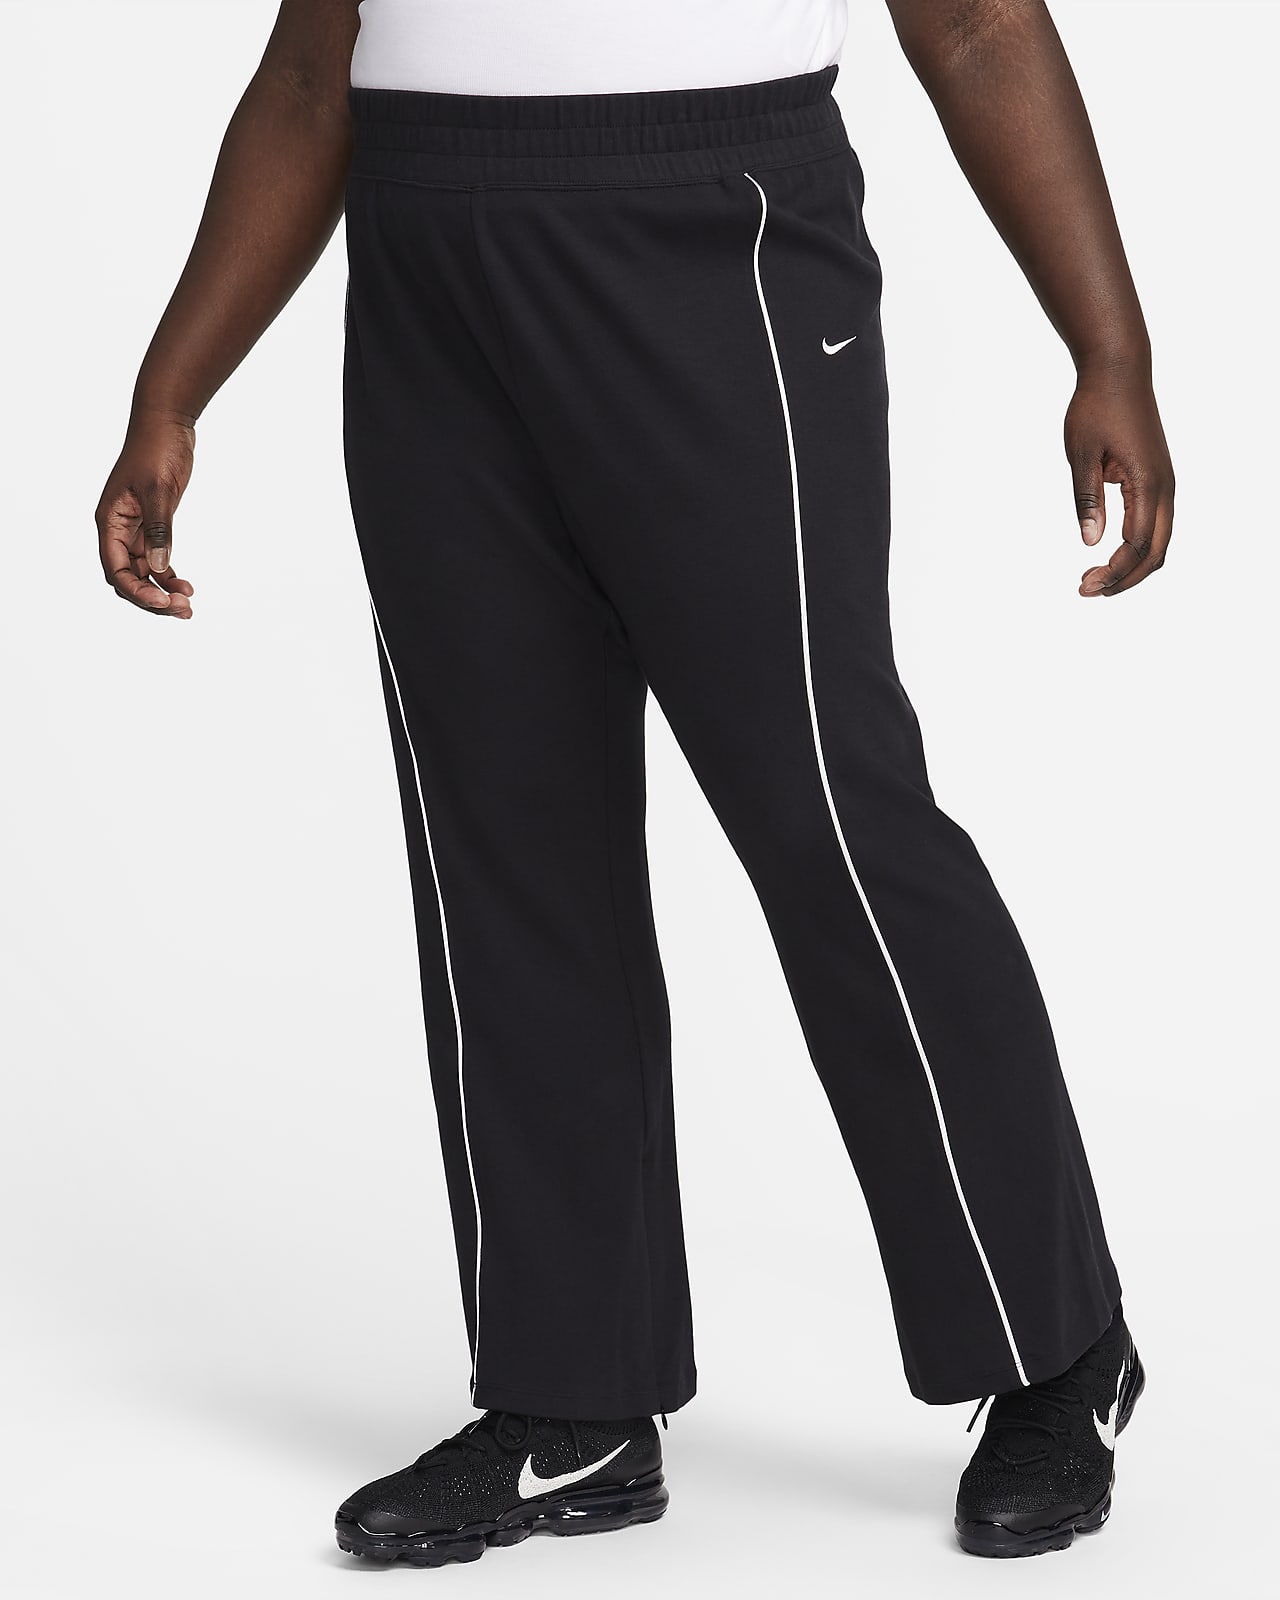 Nike Performance SCULPT LUX - Legginsy - black - Zalando.pl  Sportswear  outfits, Performance leggings, Plus size womens clothing